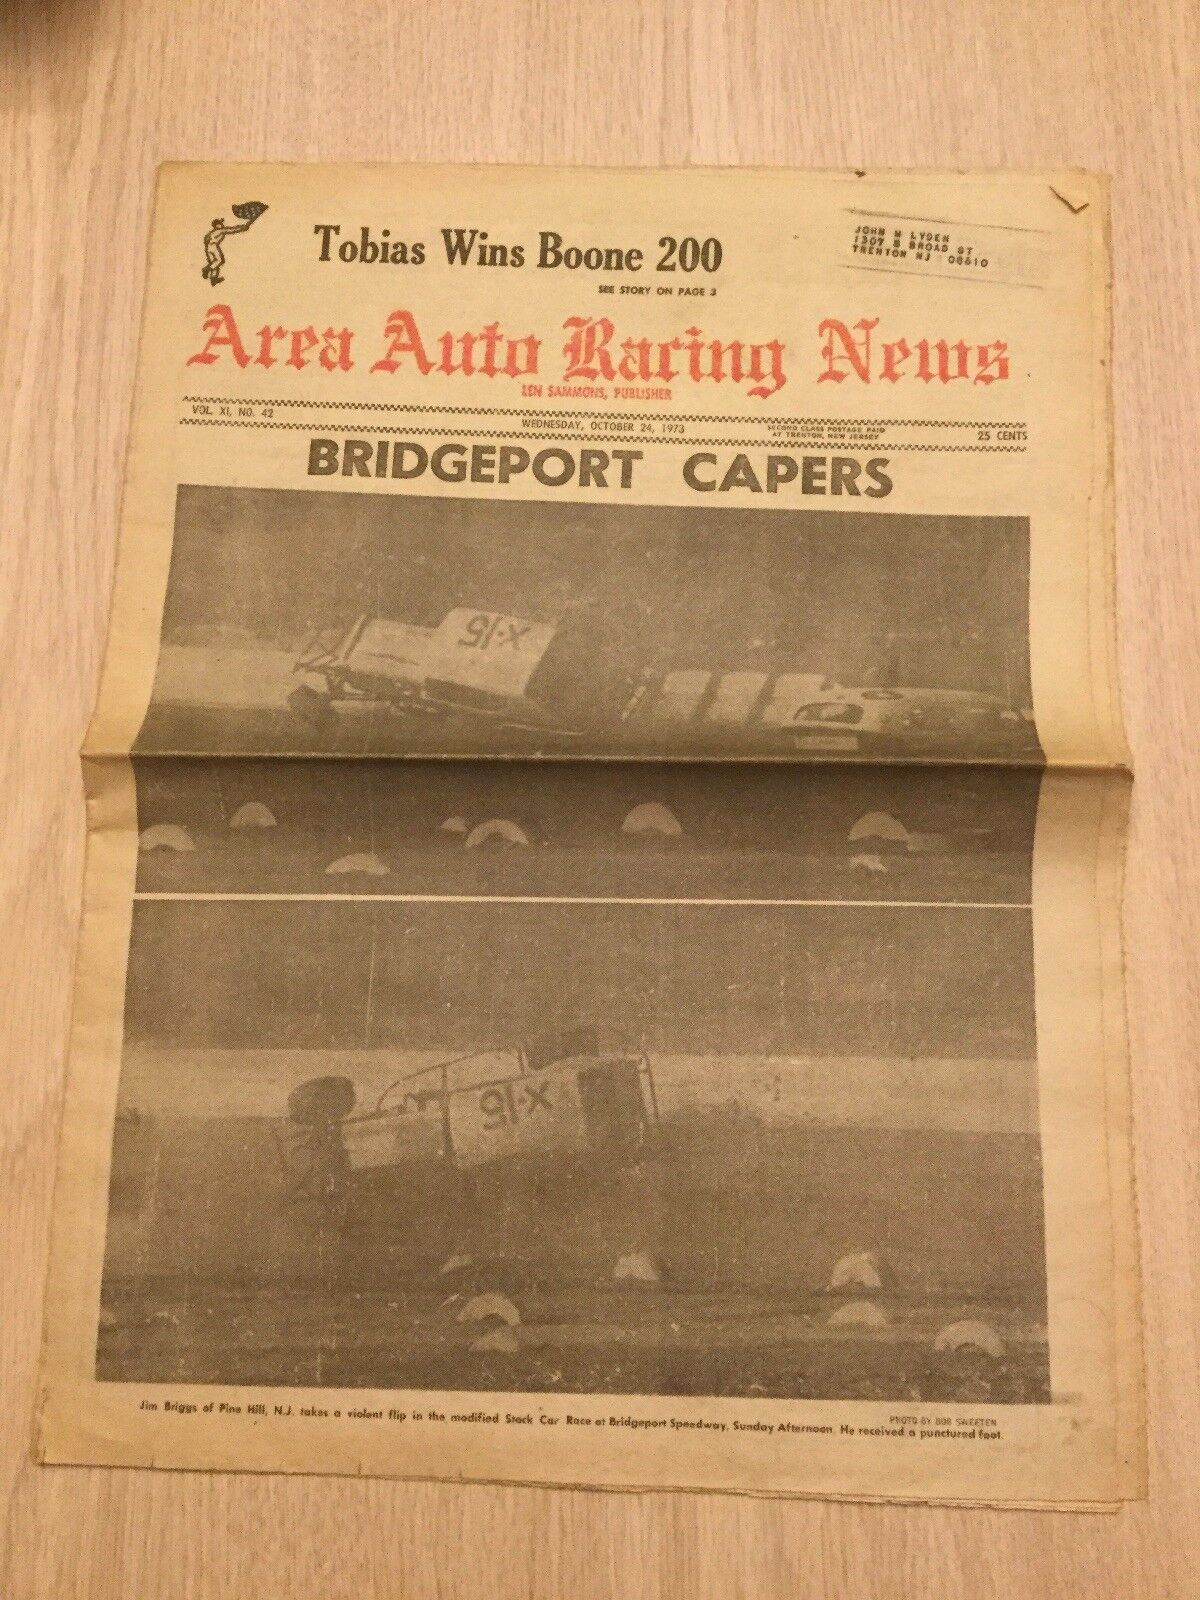 1973 Auto Car Racing Newspaper Bridgeport Speedway Jim Biggs Pine Hill Nj